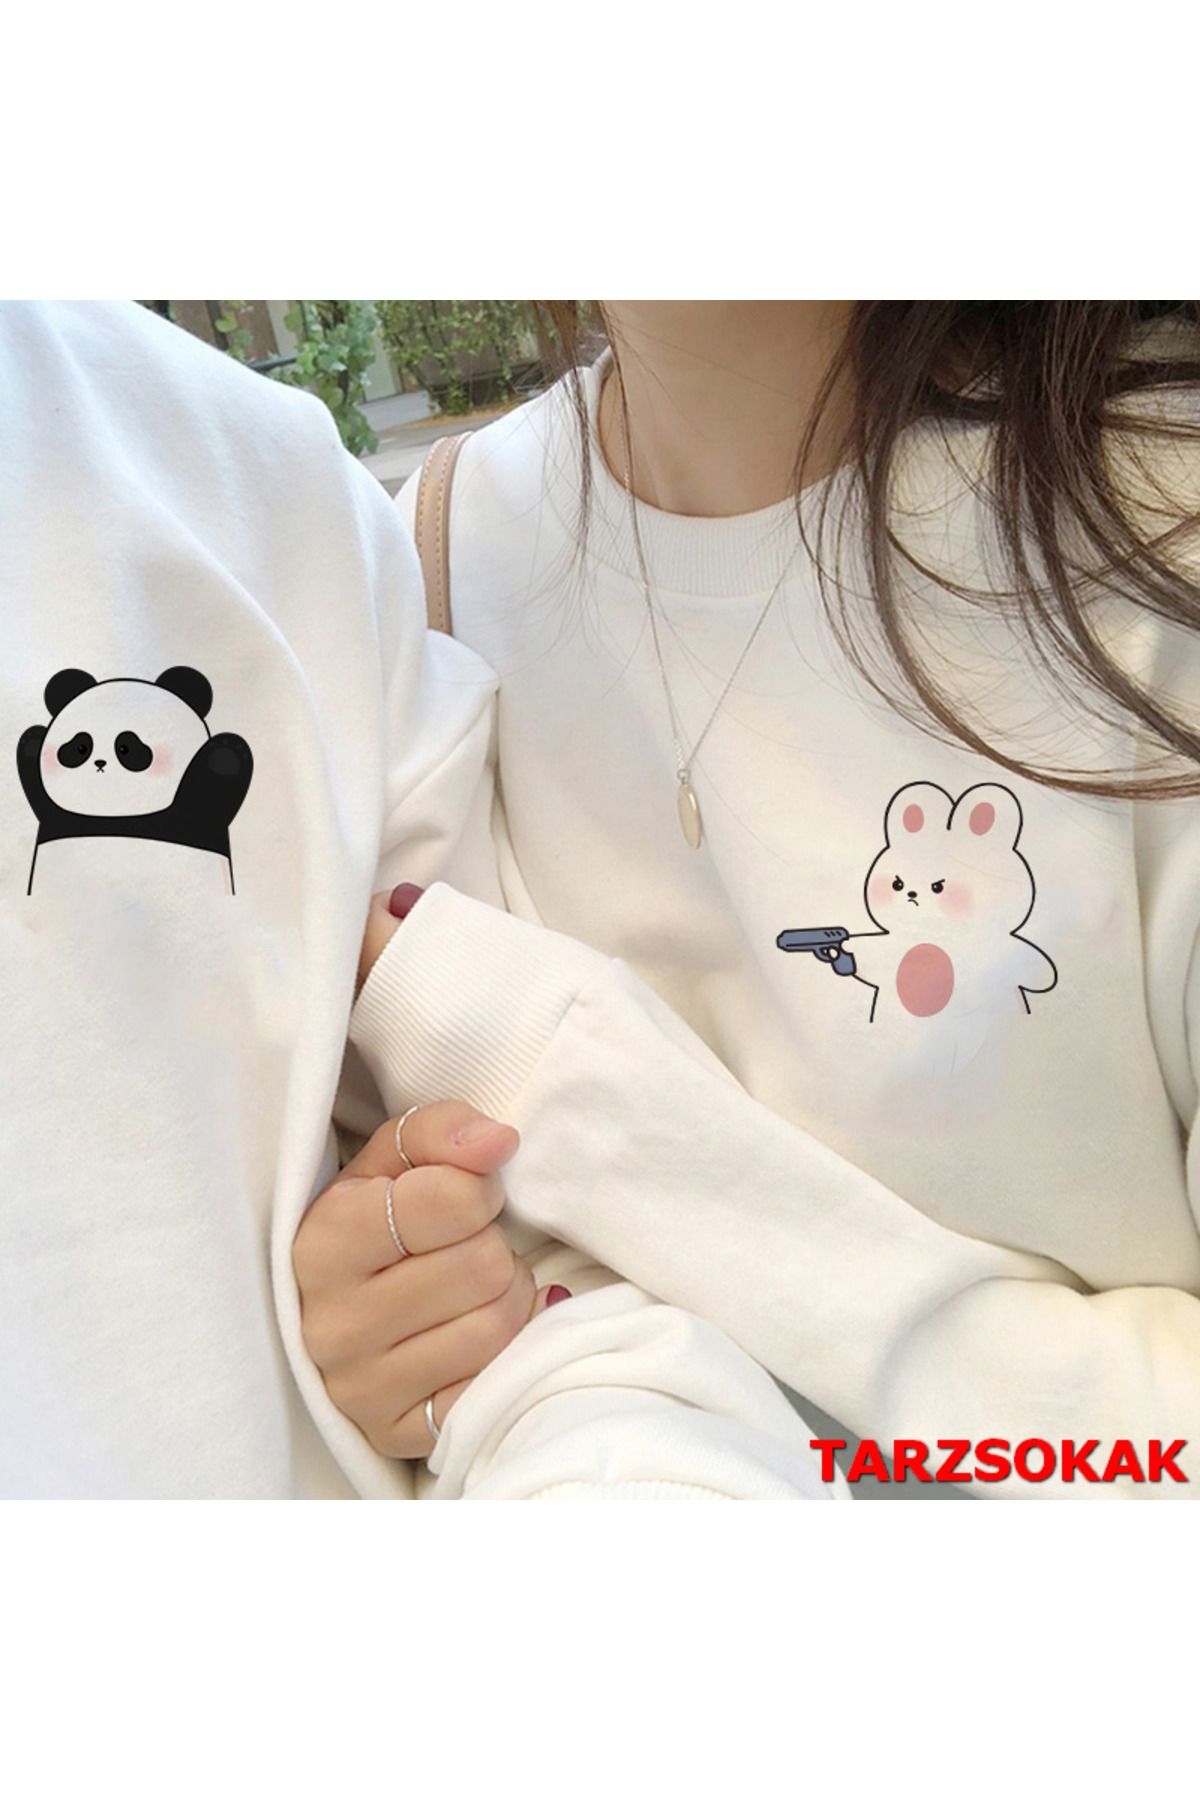 Tarzsokak Harajuku Style Çift Sevgili Kombinleri Couple Clothing Yeni Sezon KOD:50